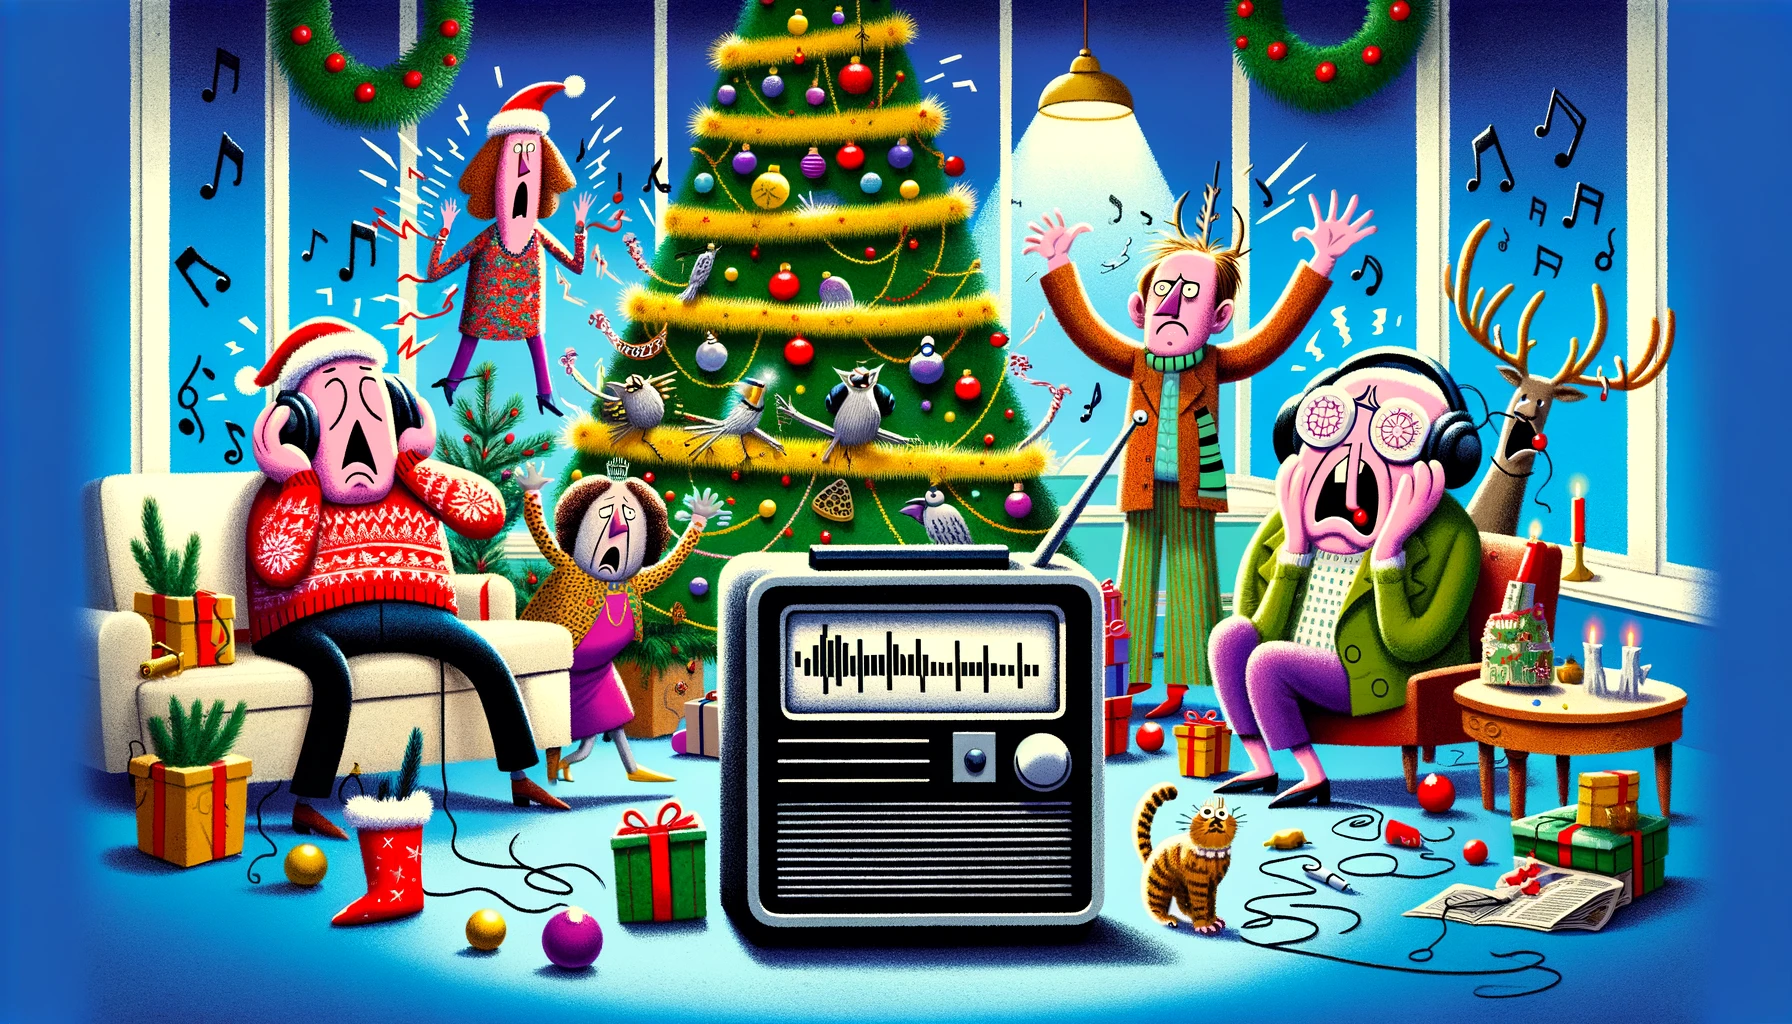 The Ghastly Jingle: An Exposé on “Last Christmas” by Wham!